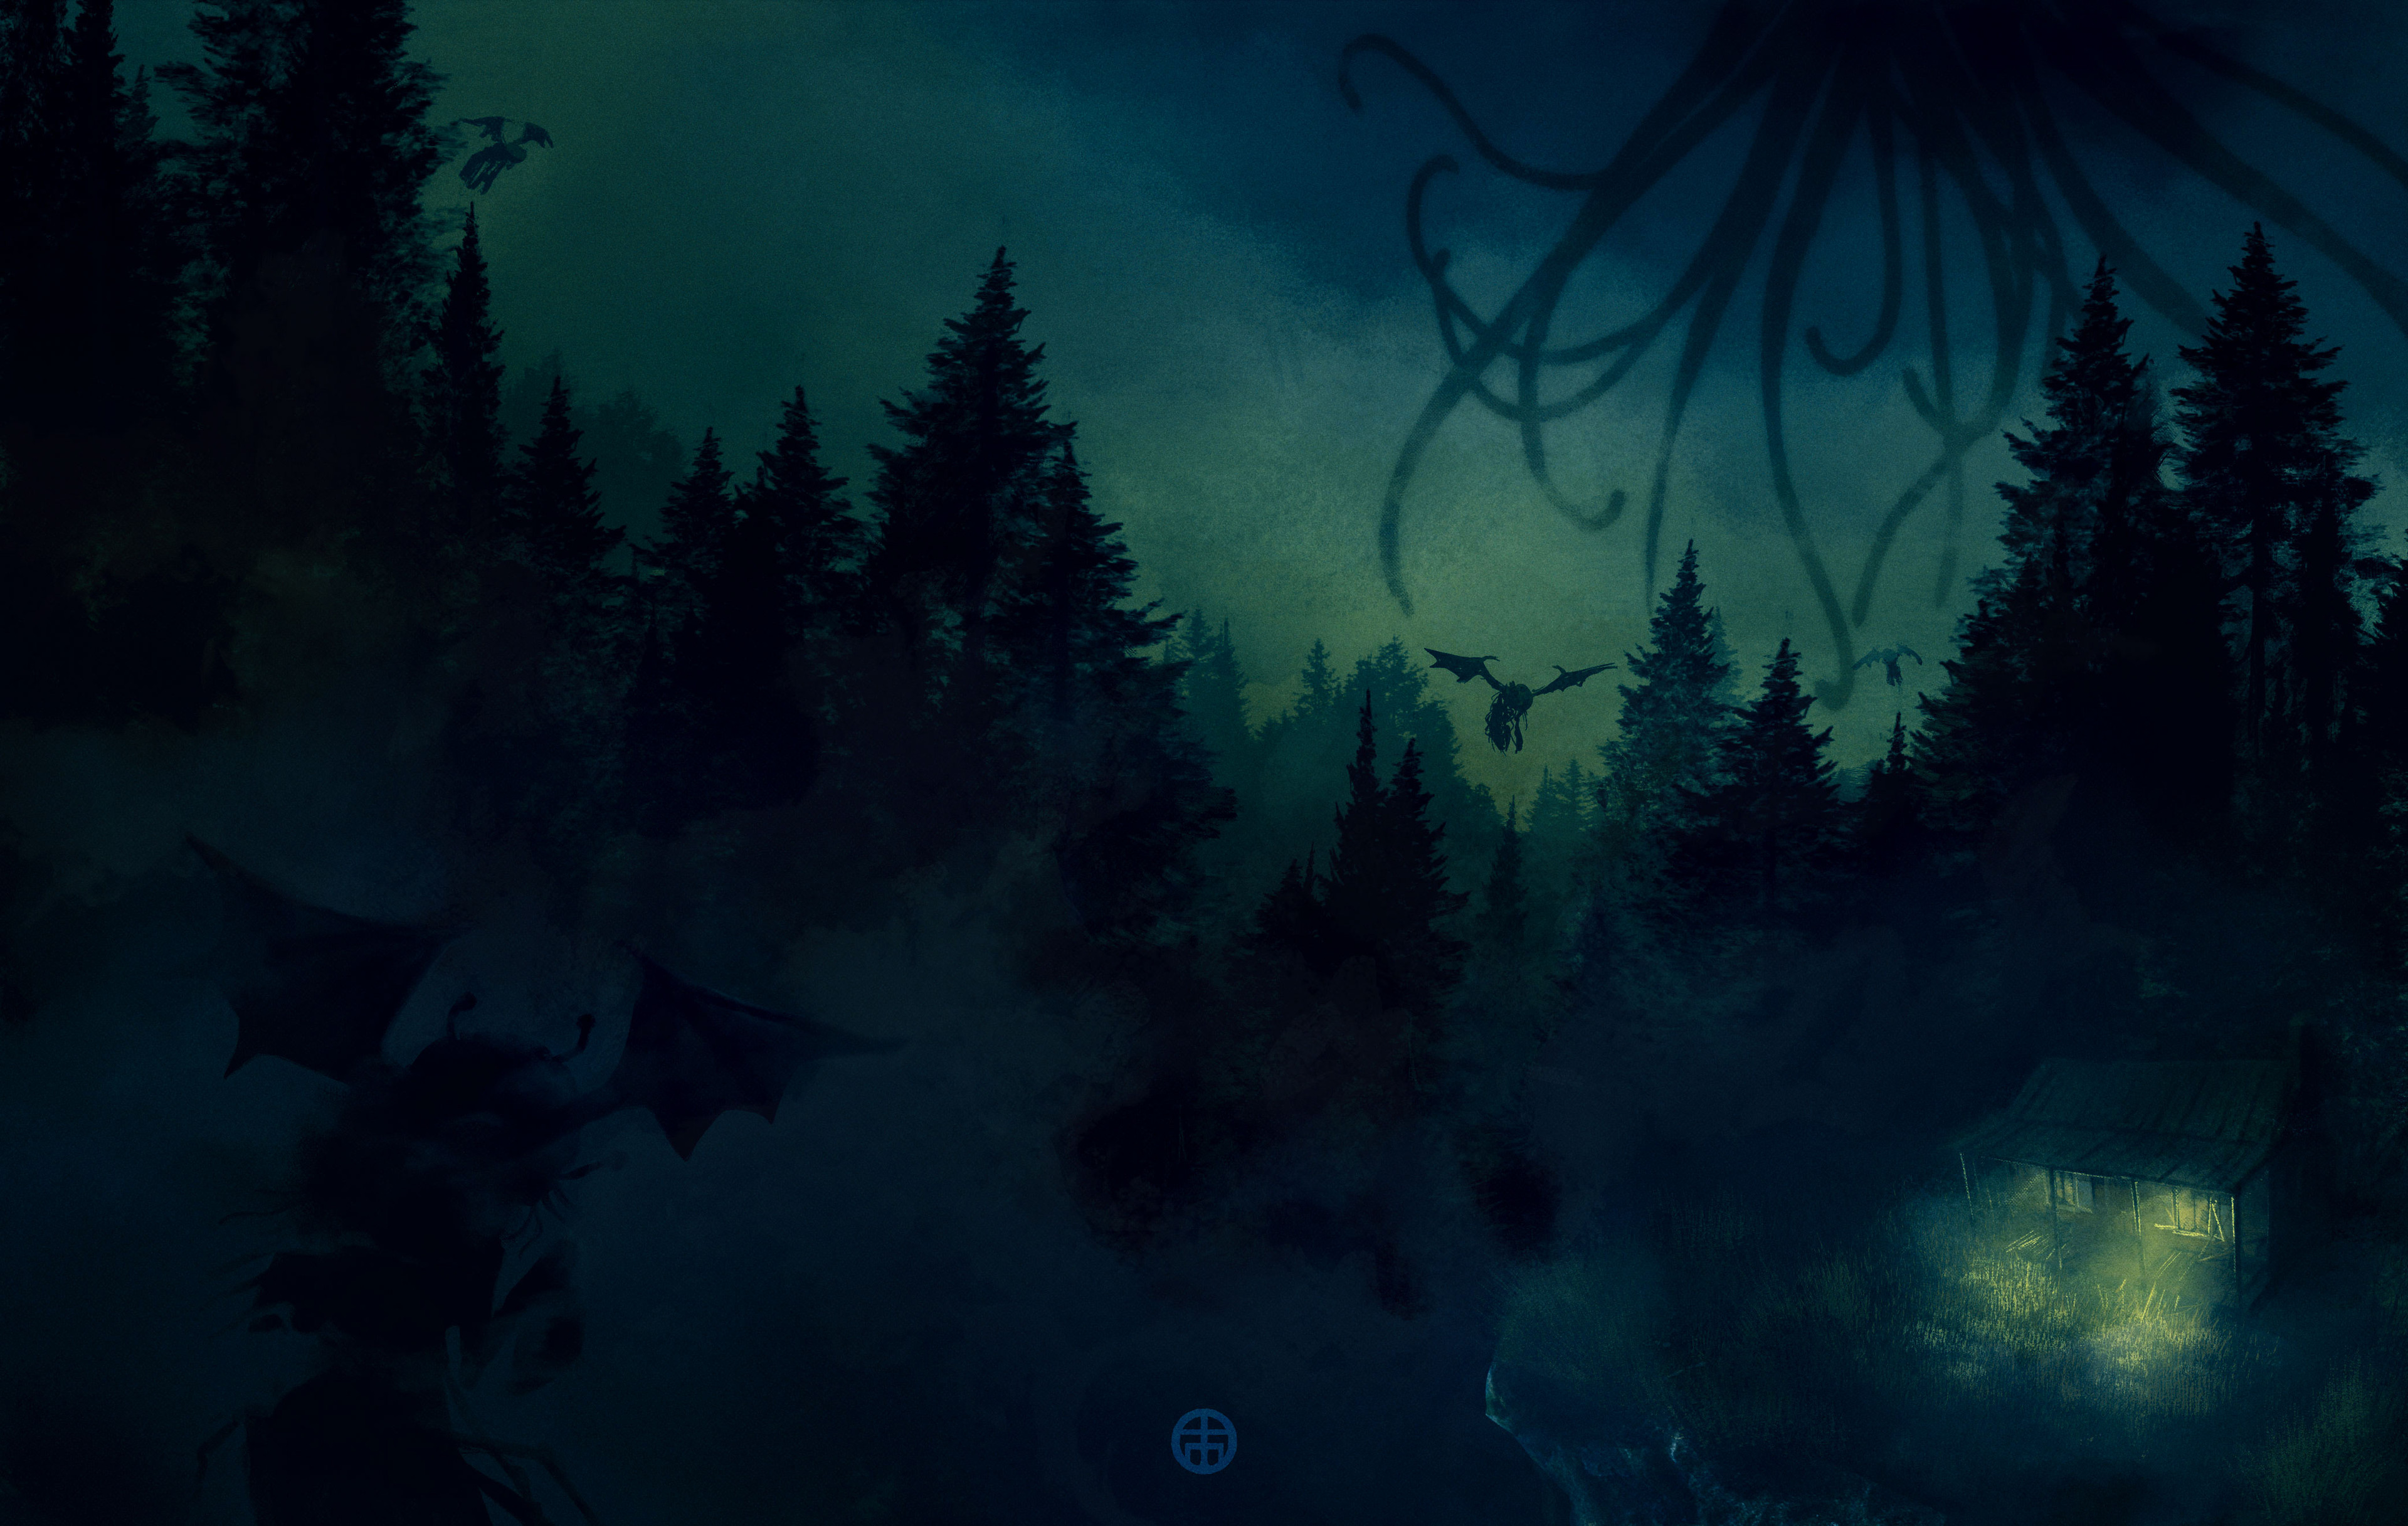 Arkham Dreams - Nightmare's Woods
/full illustration